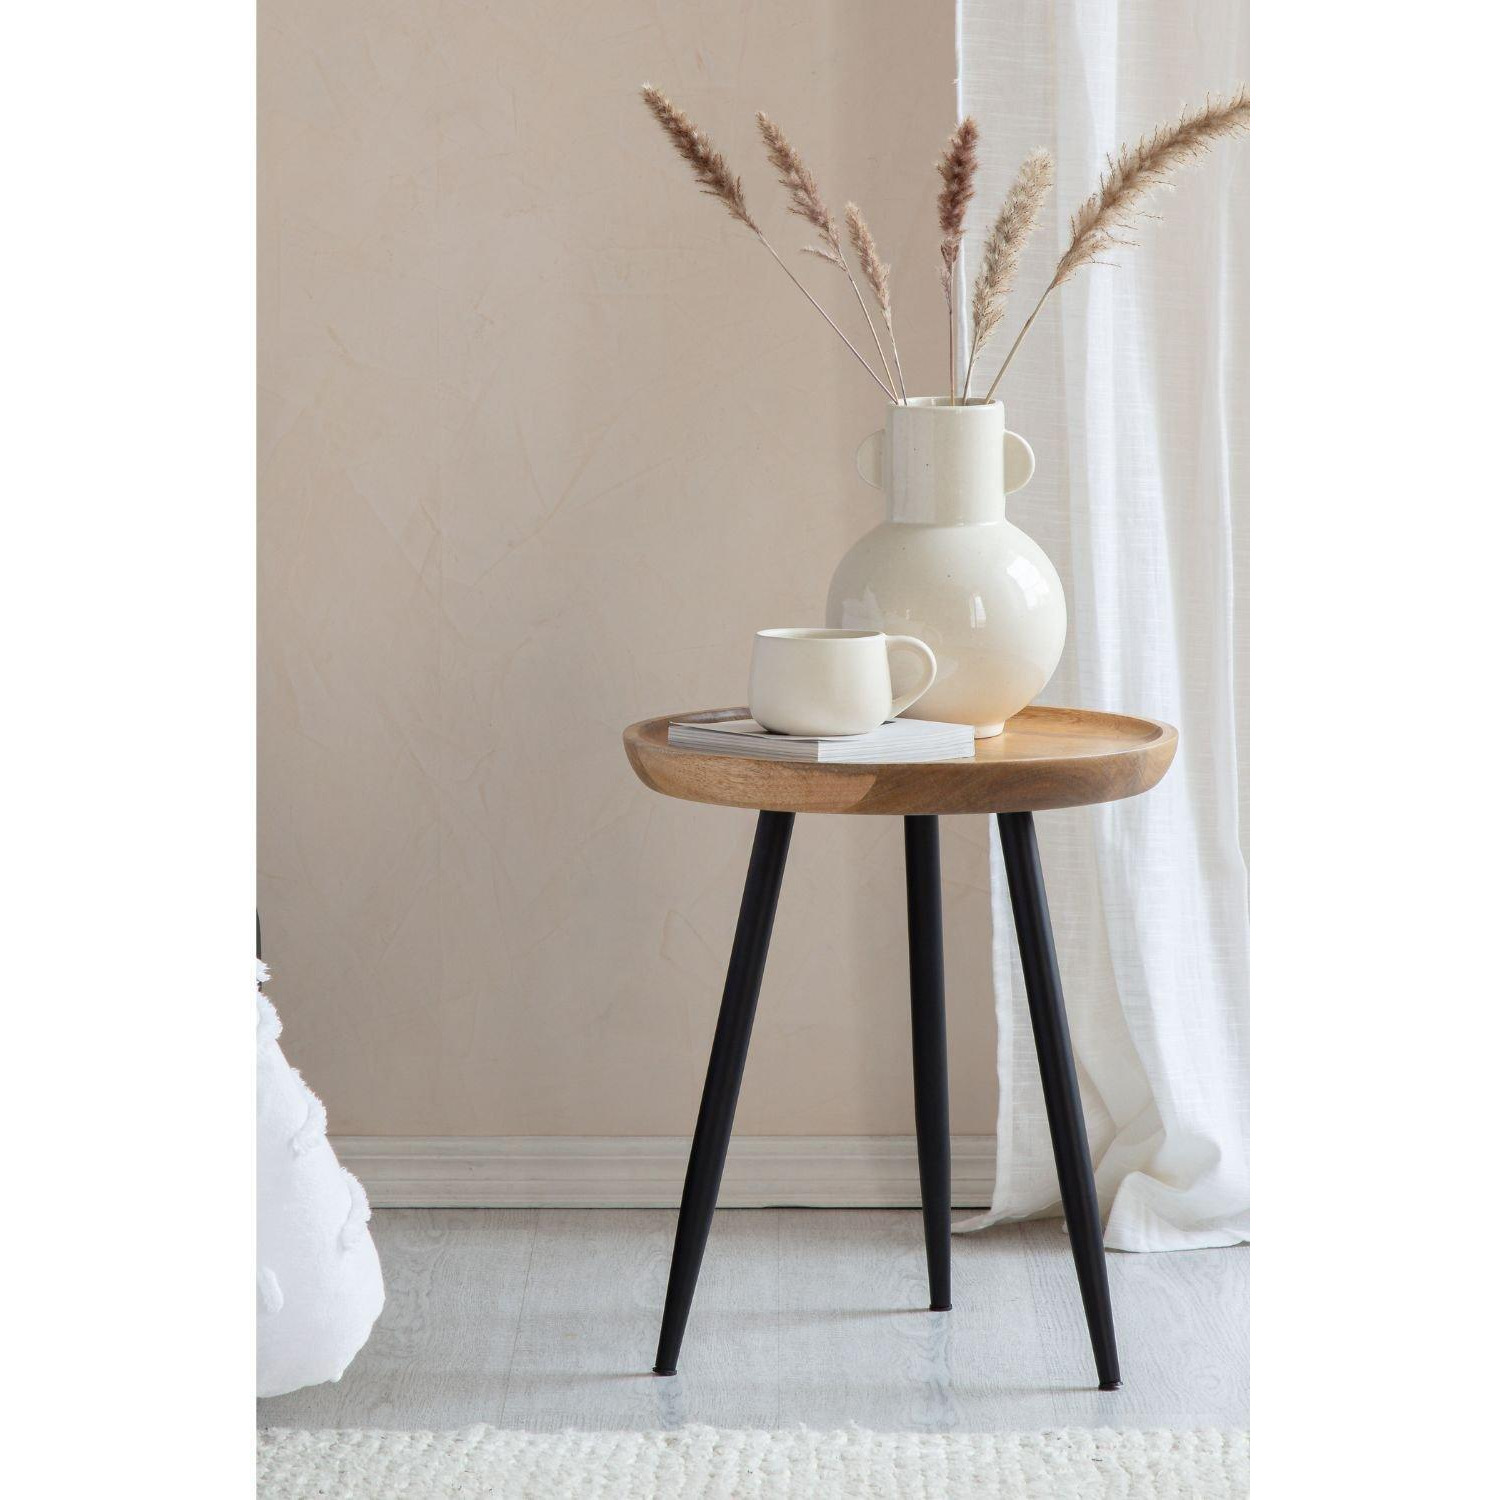 'Chervey' Round Mango Wood Tri Pin Side Table - Small - image 1